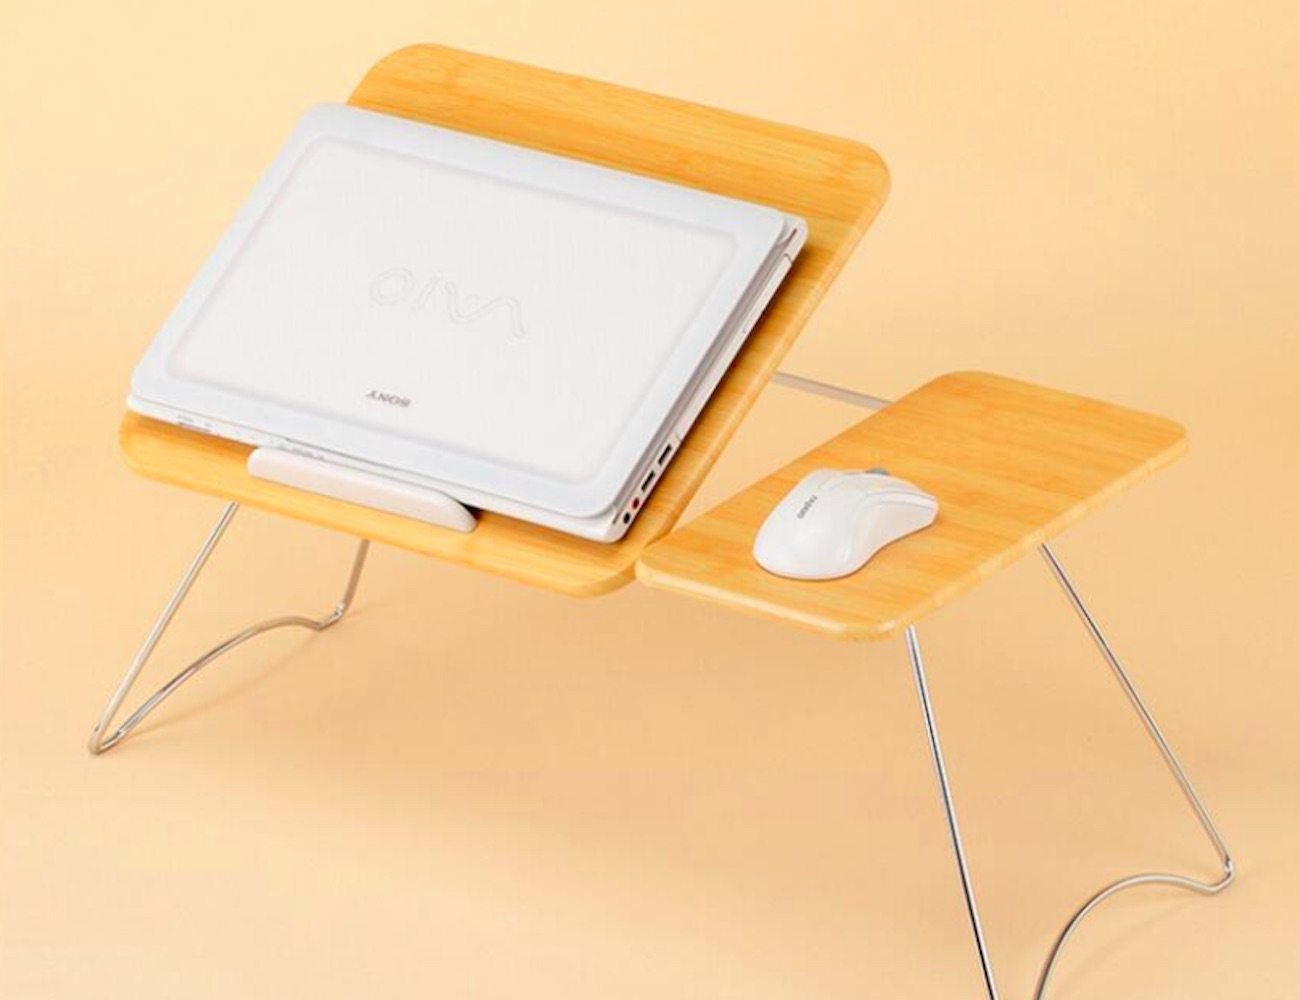 Portable Foldable Laptop Lap <em class="algolia-search-highlight">Desk</em> puts your office at your fingertips